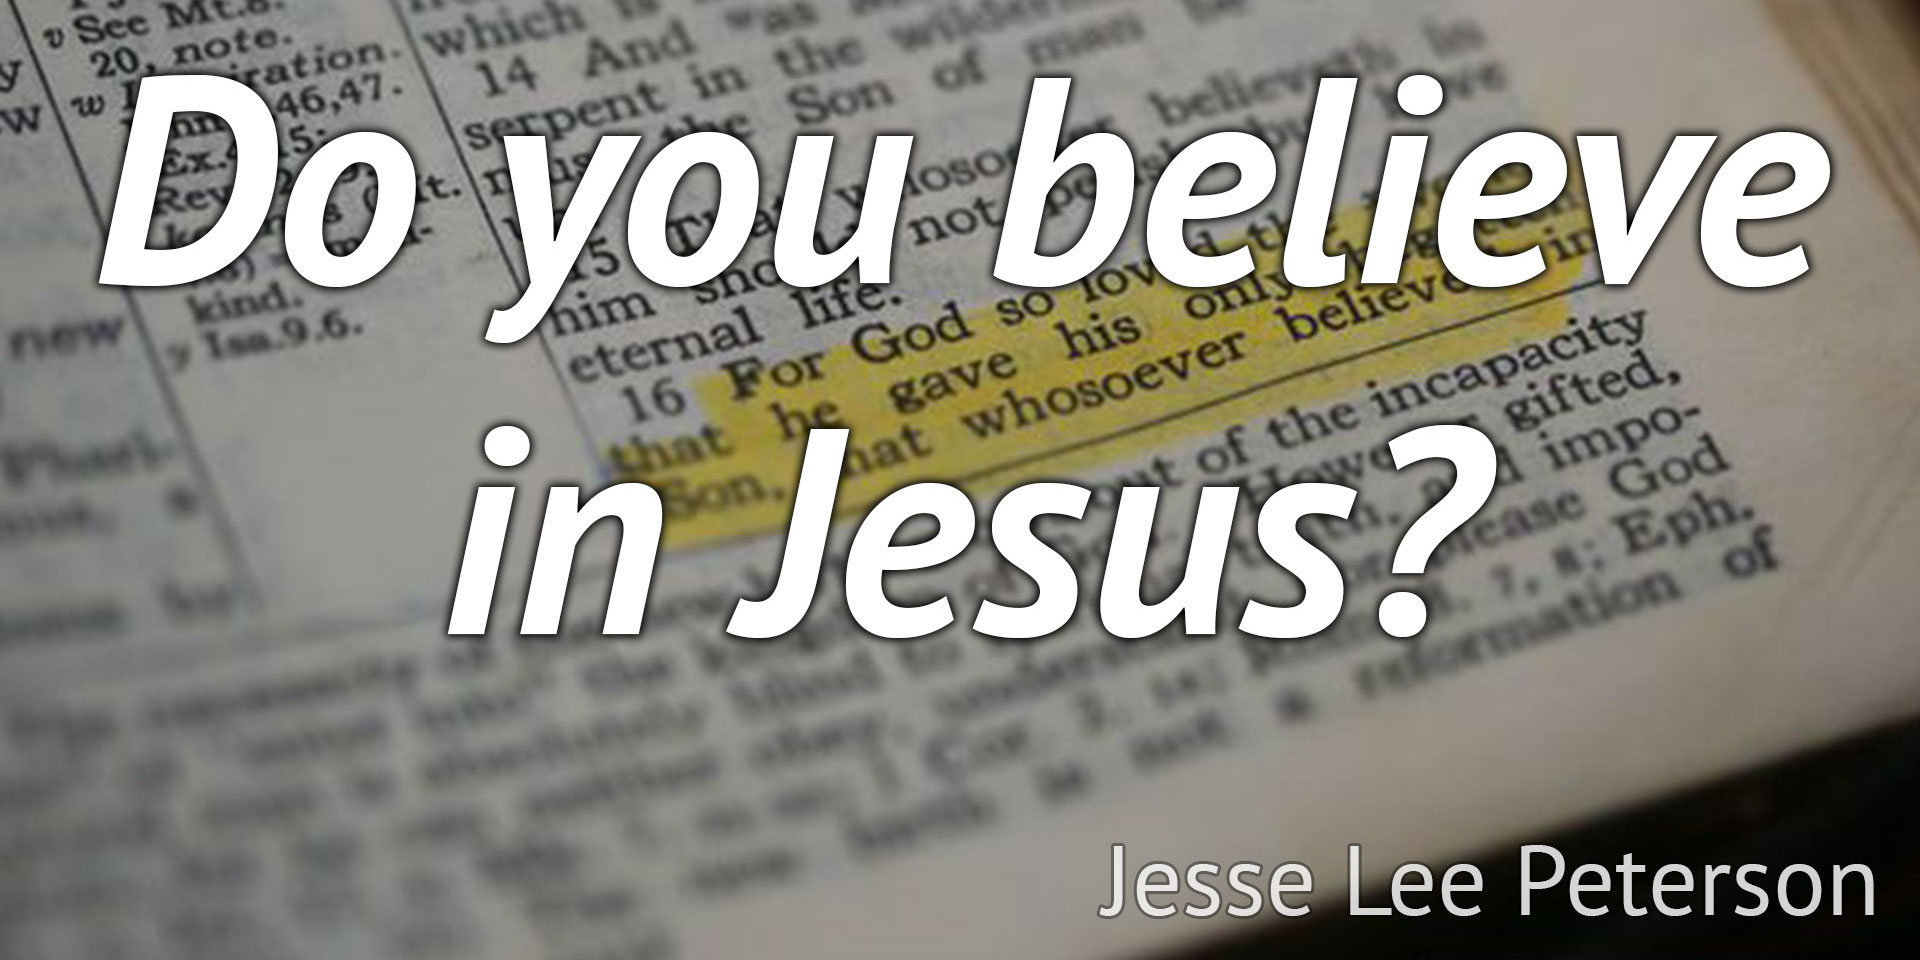 Jesse Lee Peterson Biblical Question: Do You Believe in Jesus?